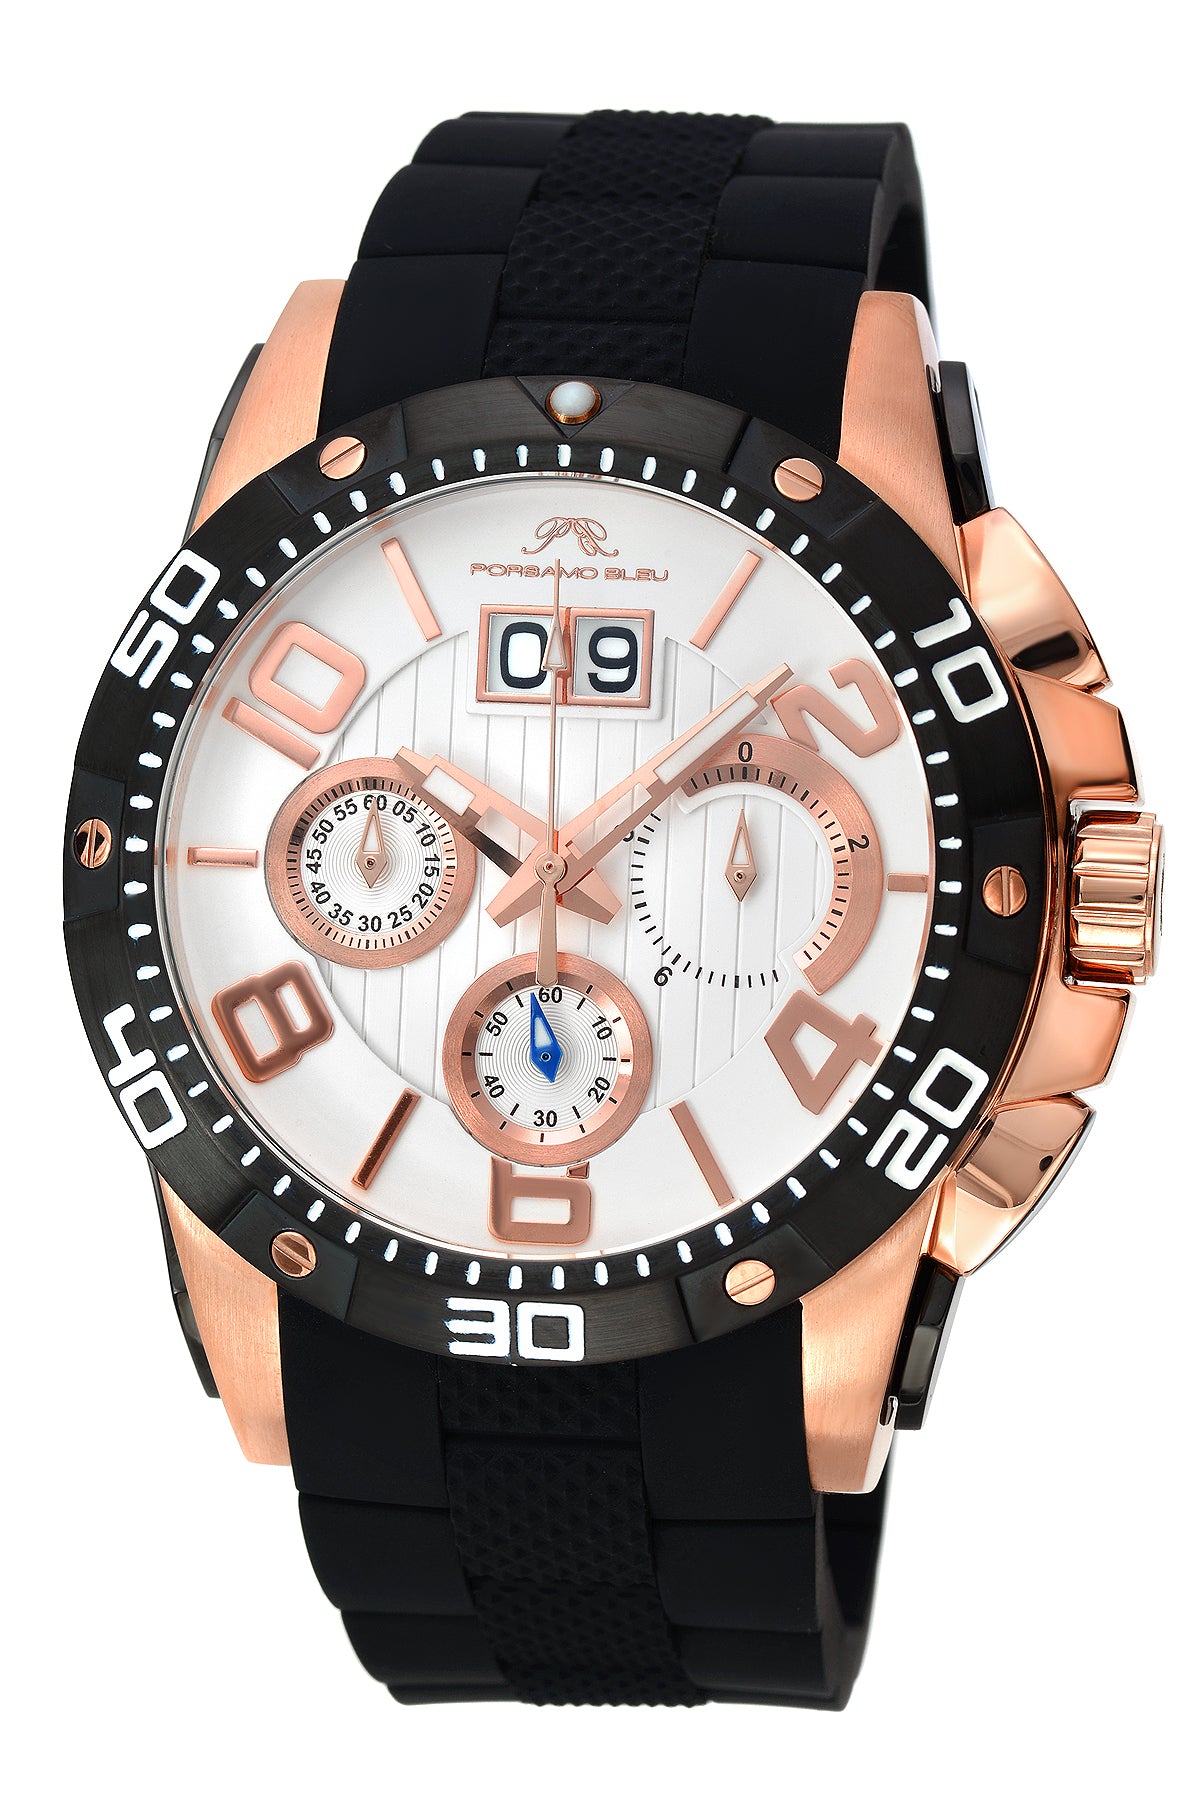 Porsamo Bleu Francoise luxury chronograph men's watch, silicone strap, silver, black 244BFRR